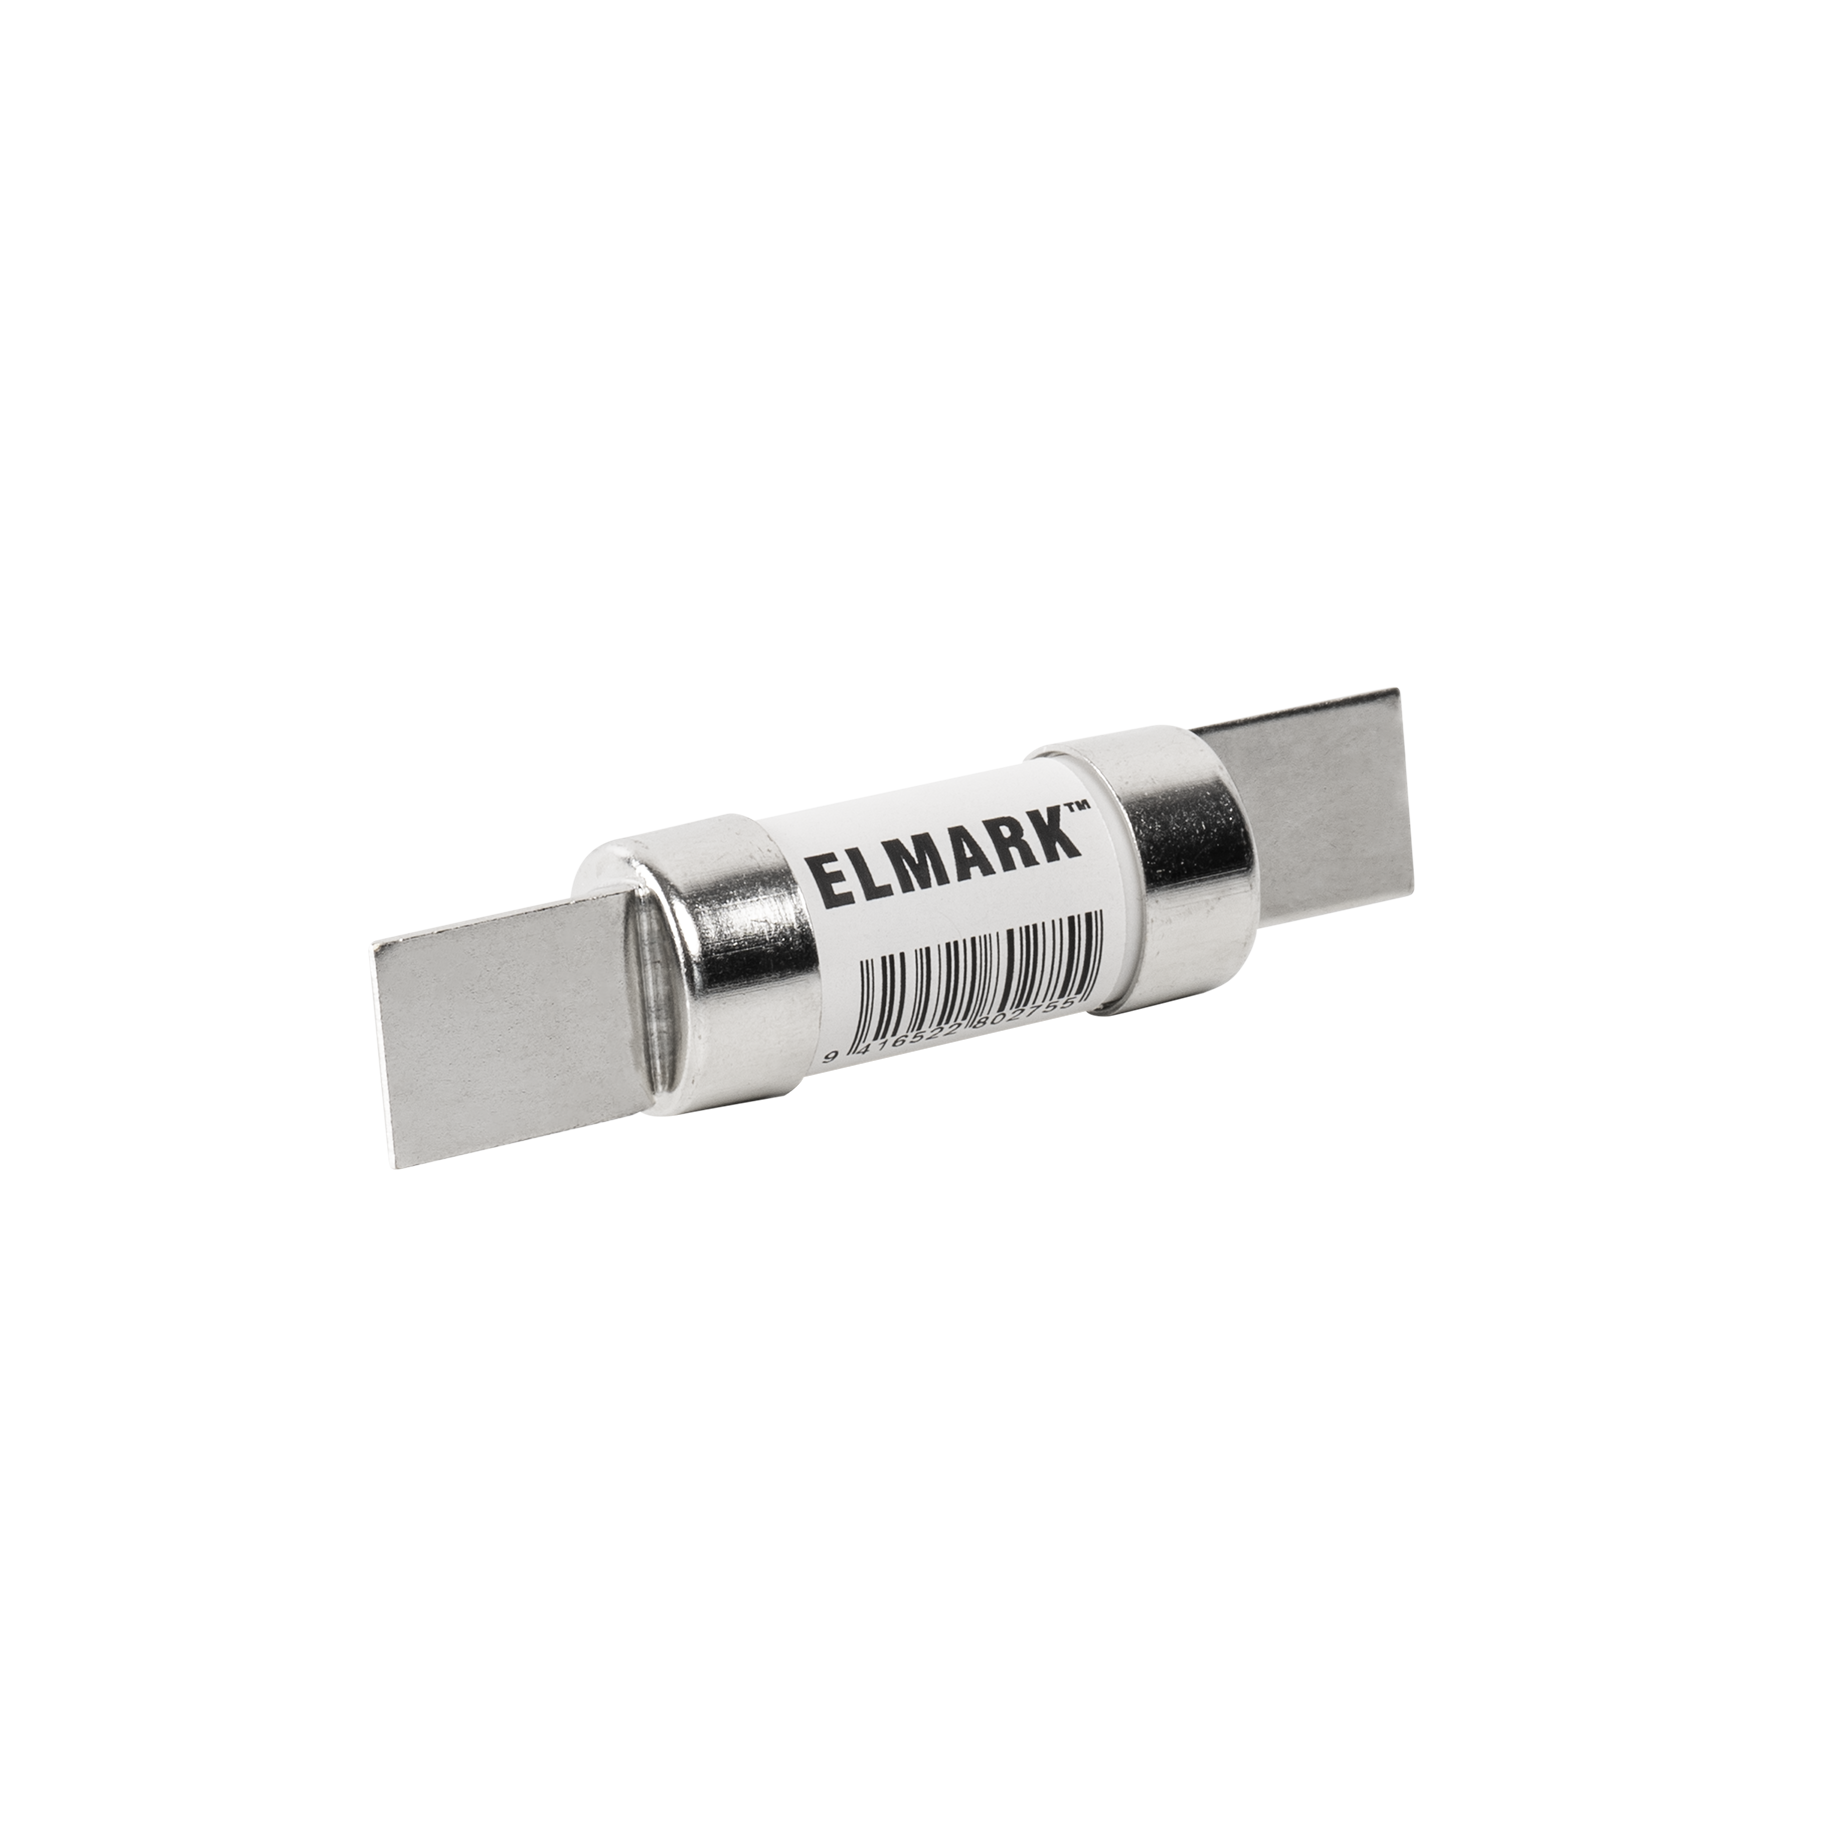 ELMARK HRC FUSE LINK STAGGERED TAG 10A 550V 10G06